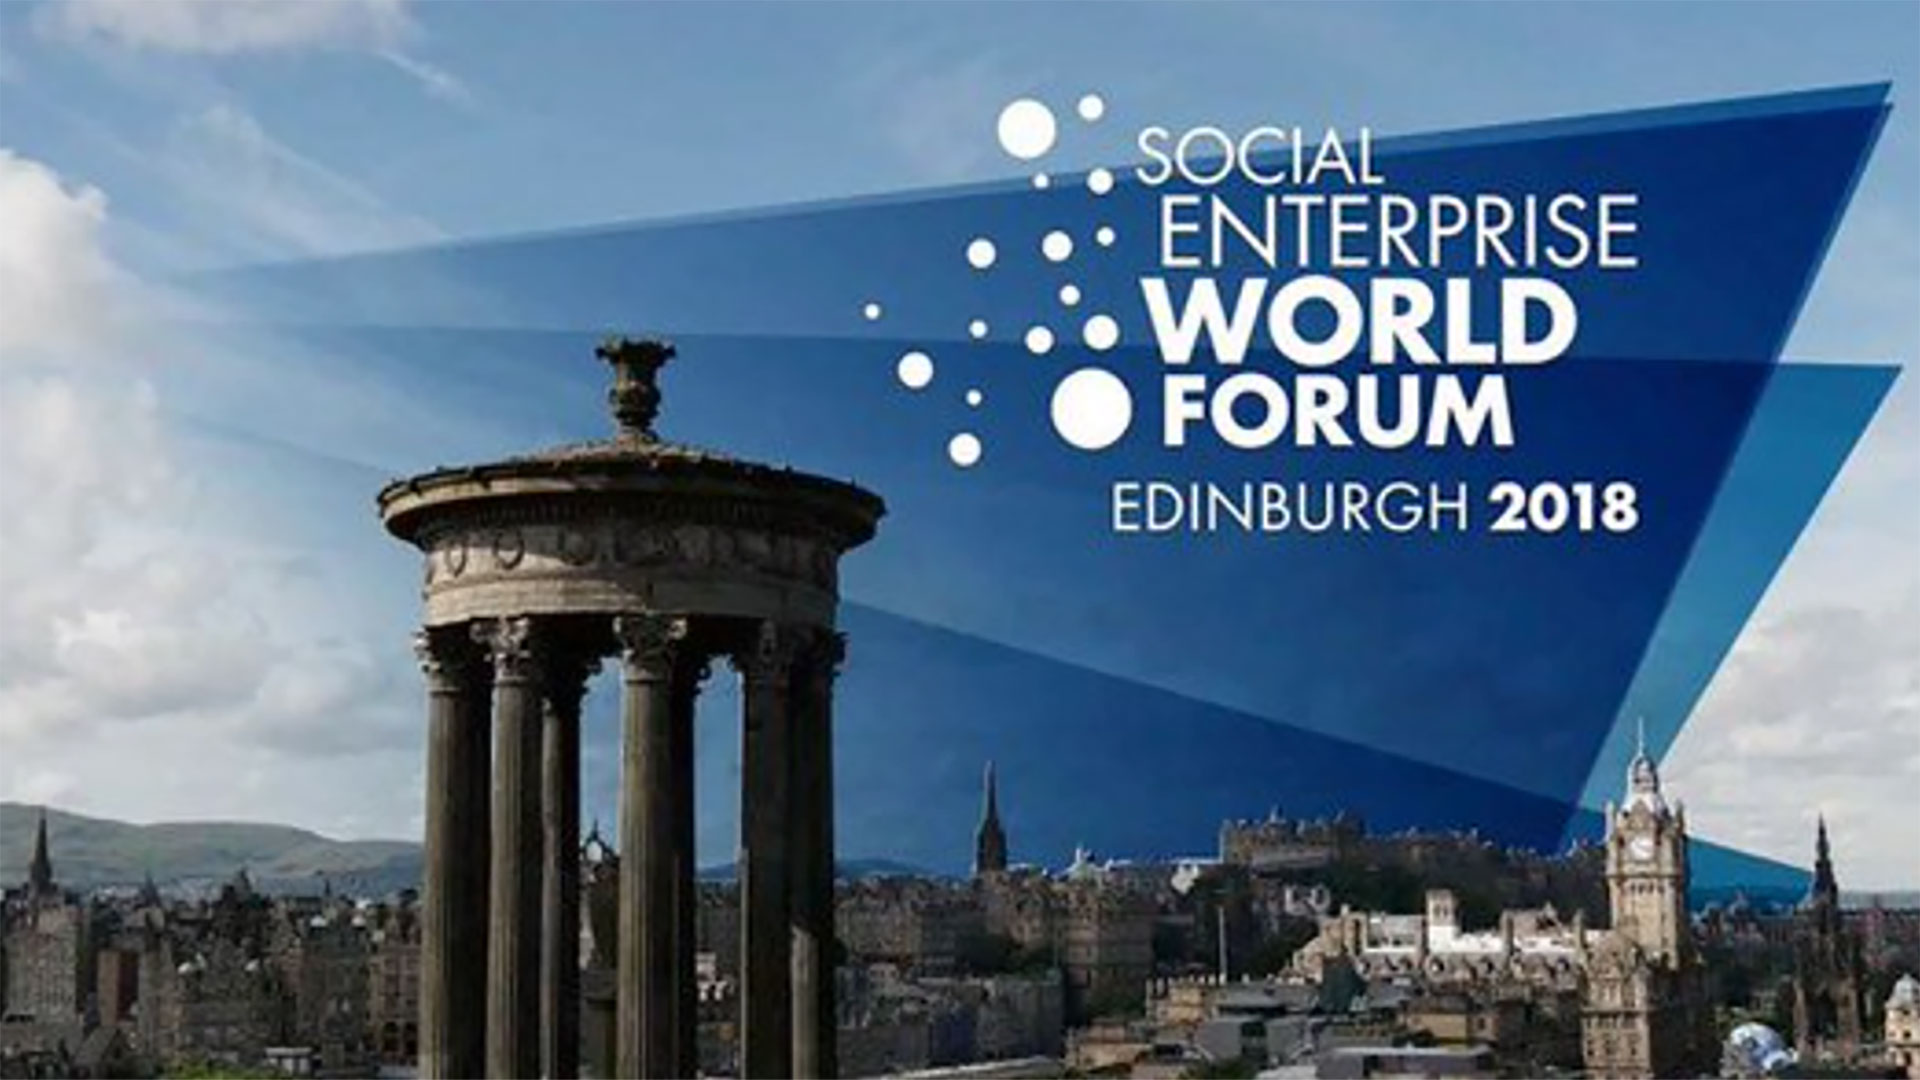 Social enterprise world forum